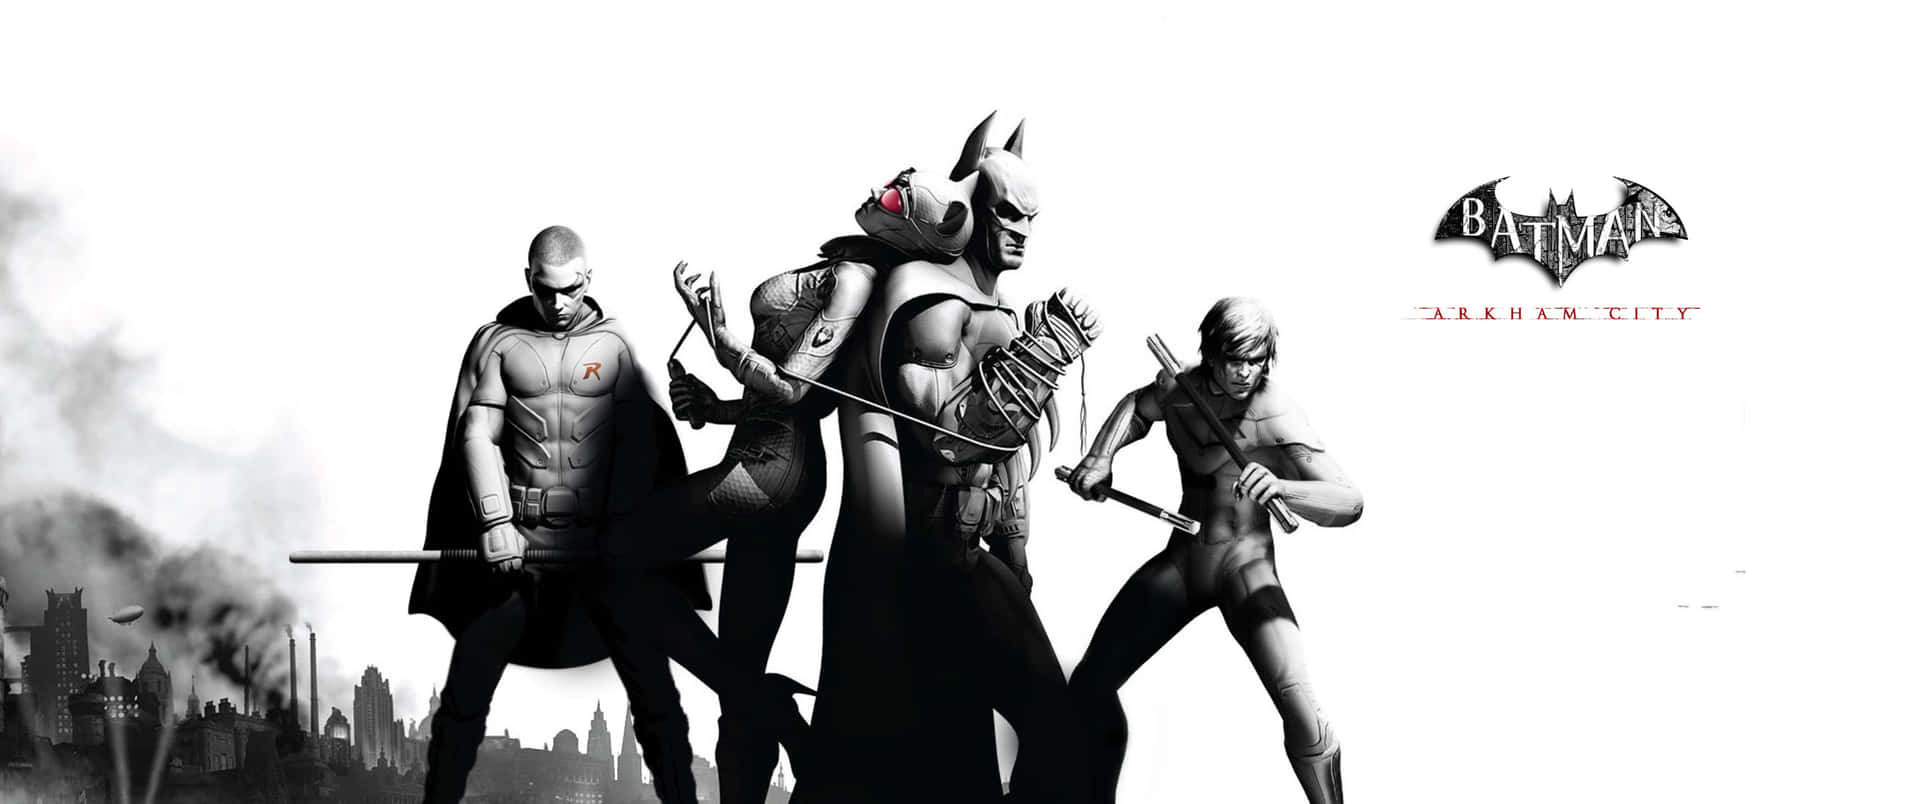 Batman ready to take on the villains of Arkham City